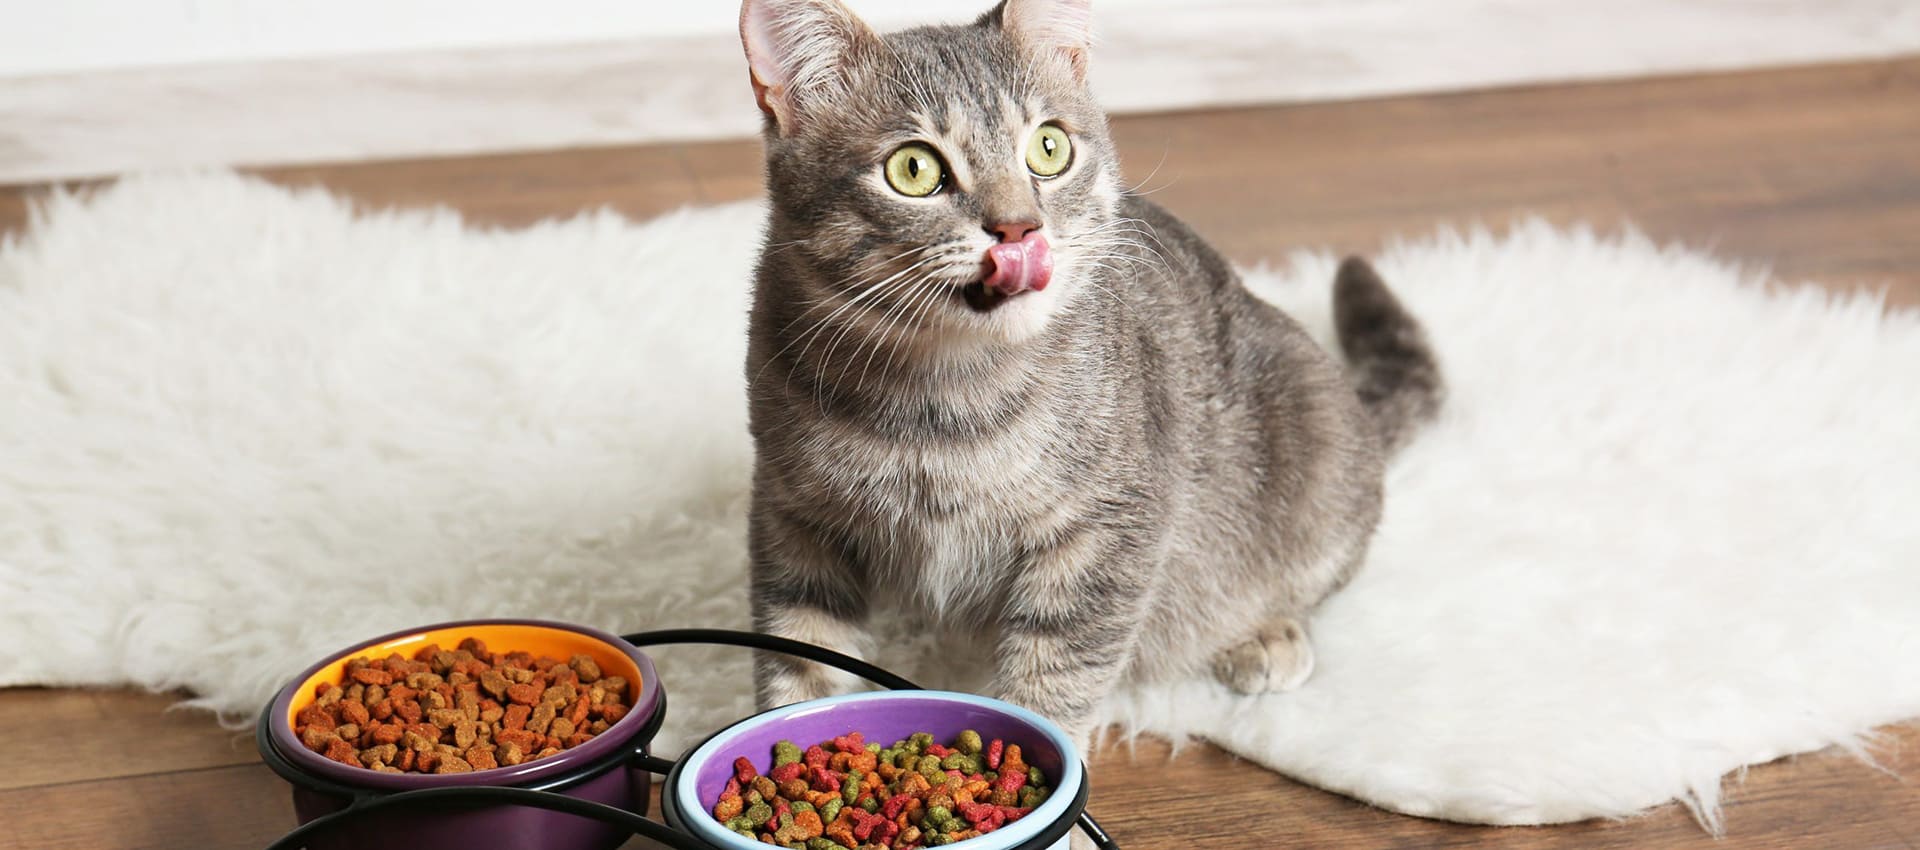 Корм для аппетита для кошки. Корм для кошек. Кошка ест корм. Натуральная еда для кошек.